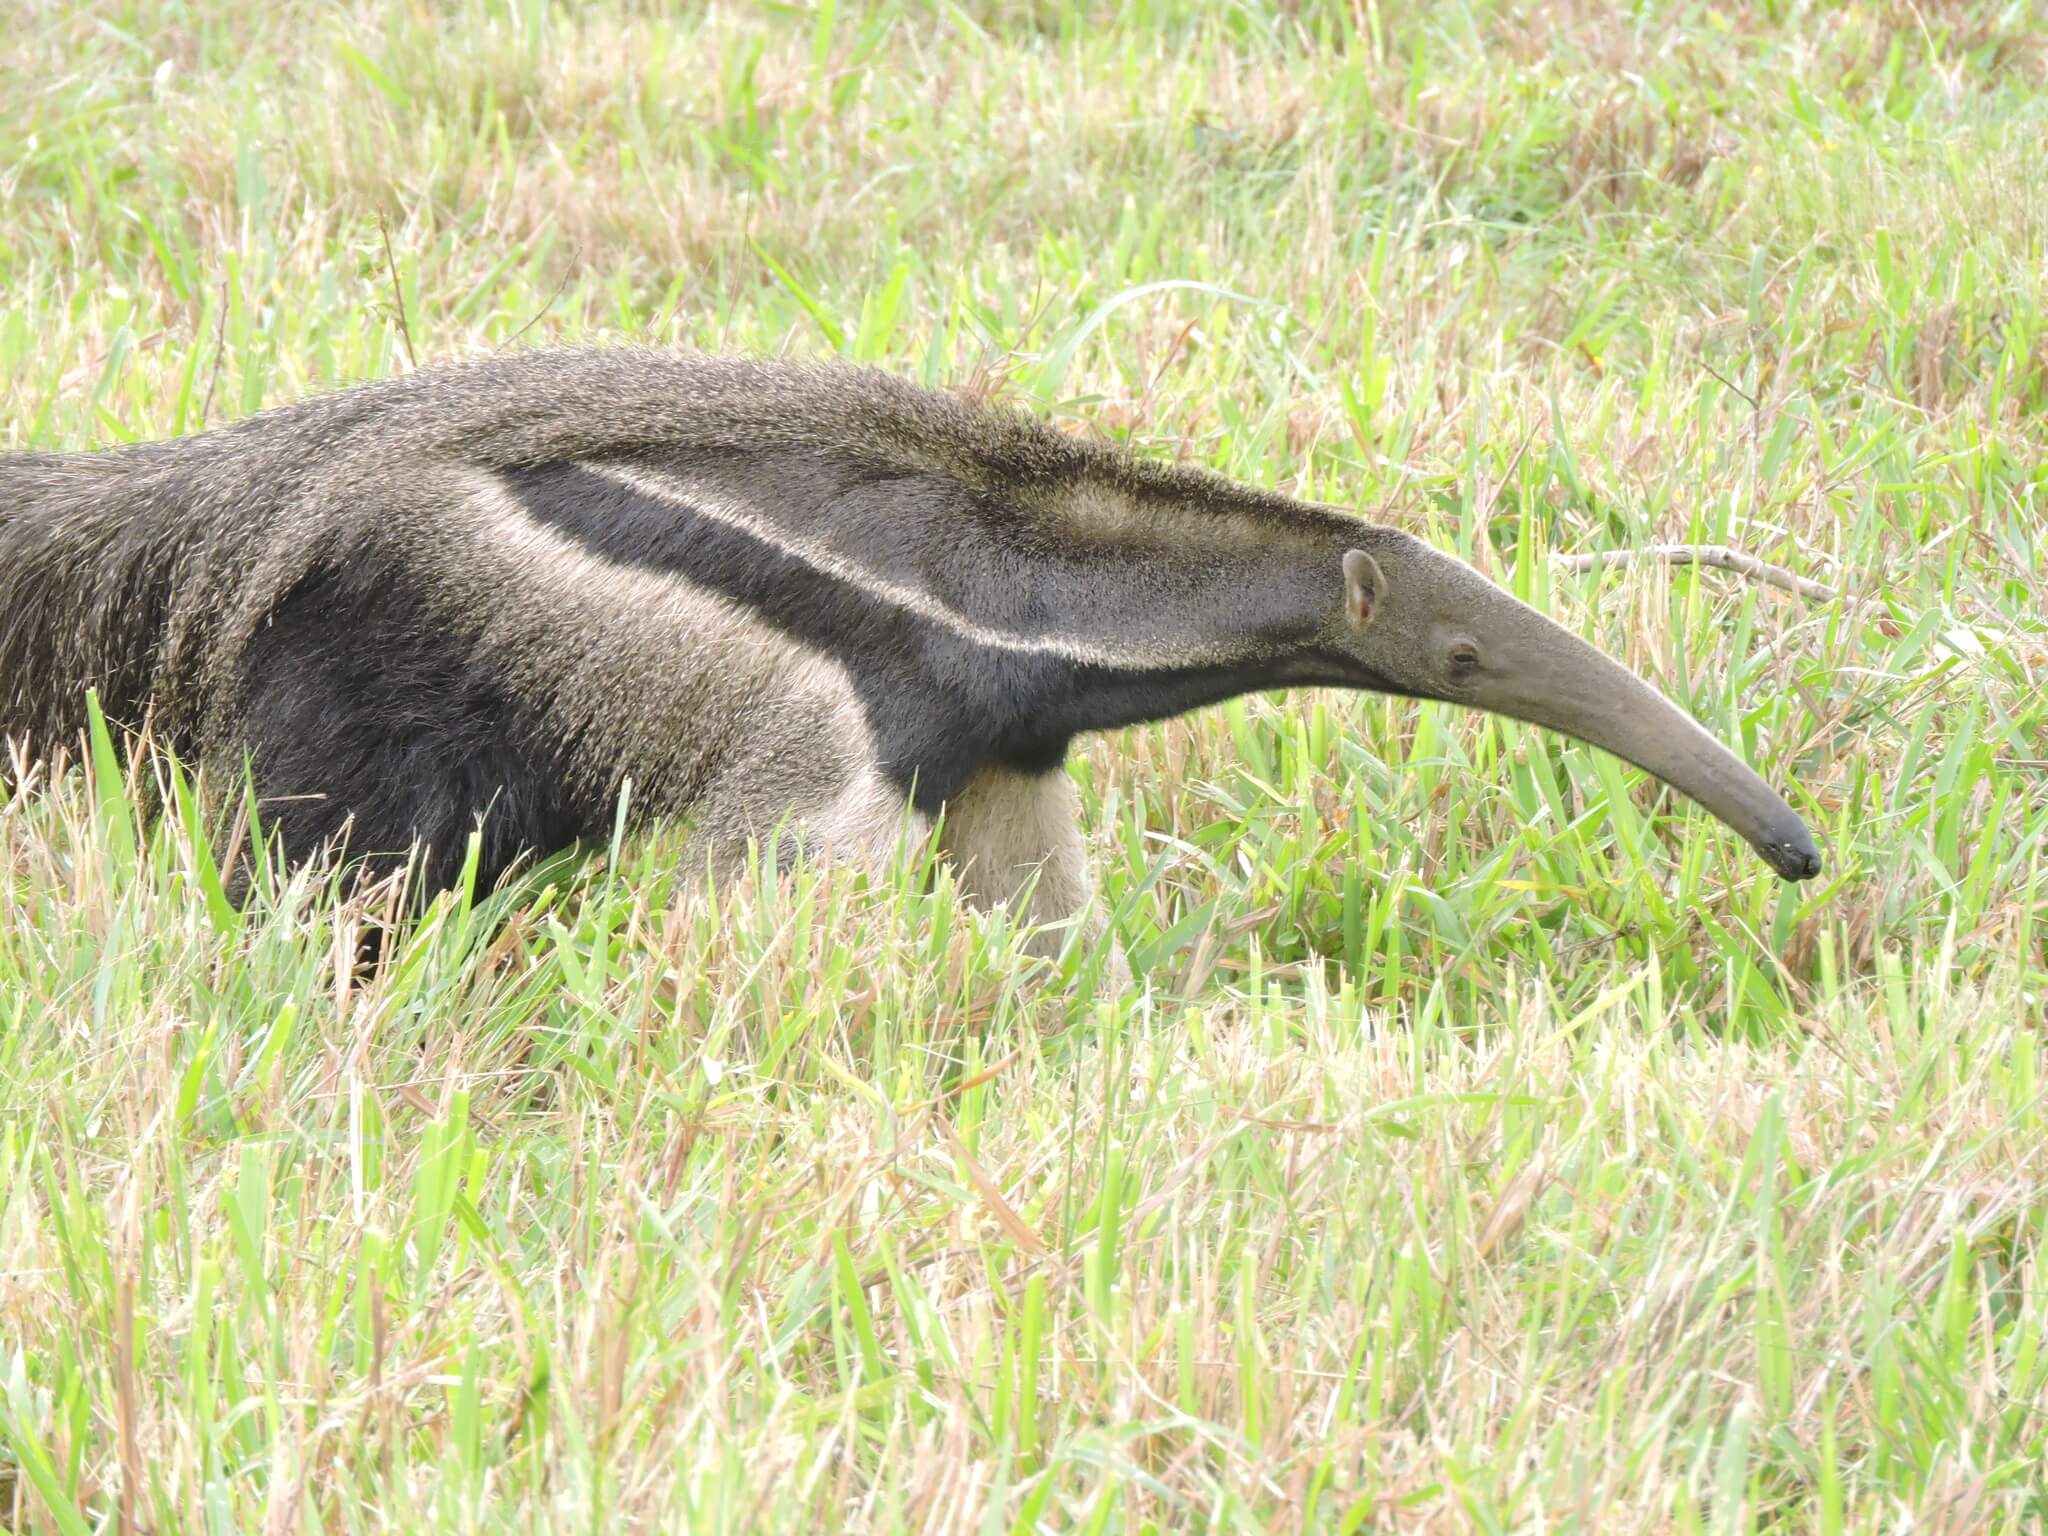 An anteater.